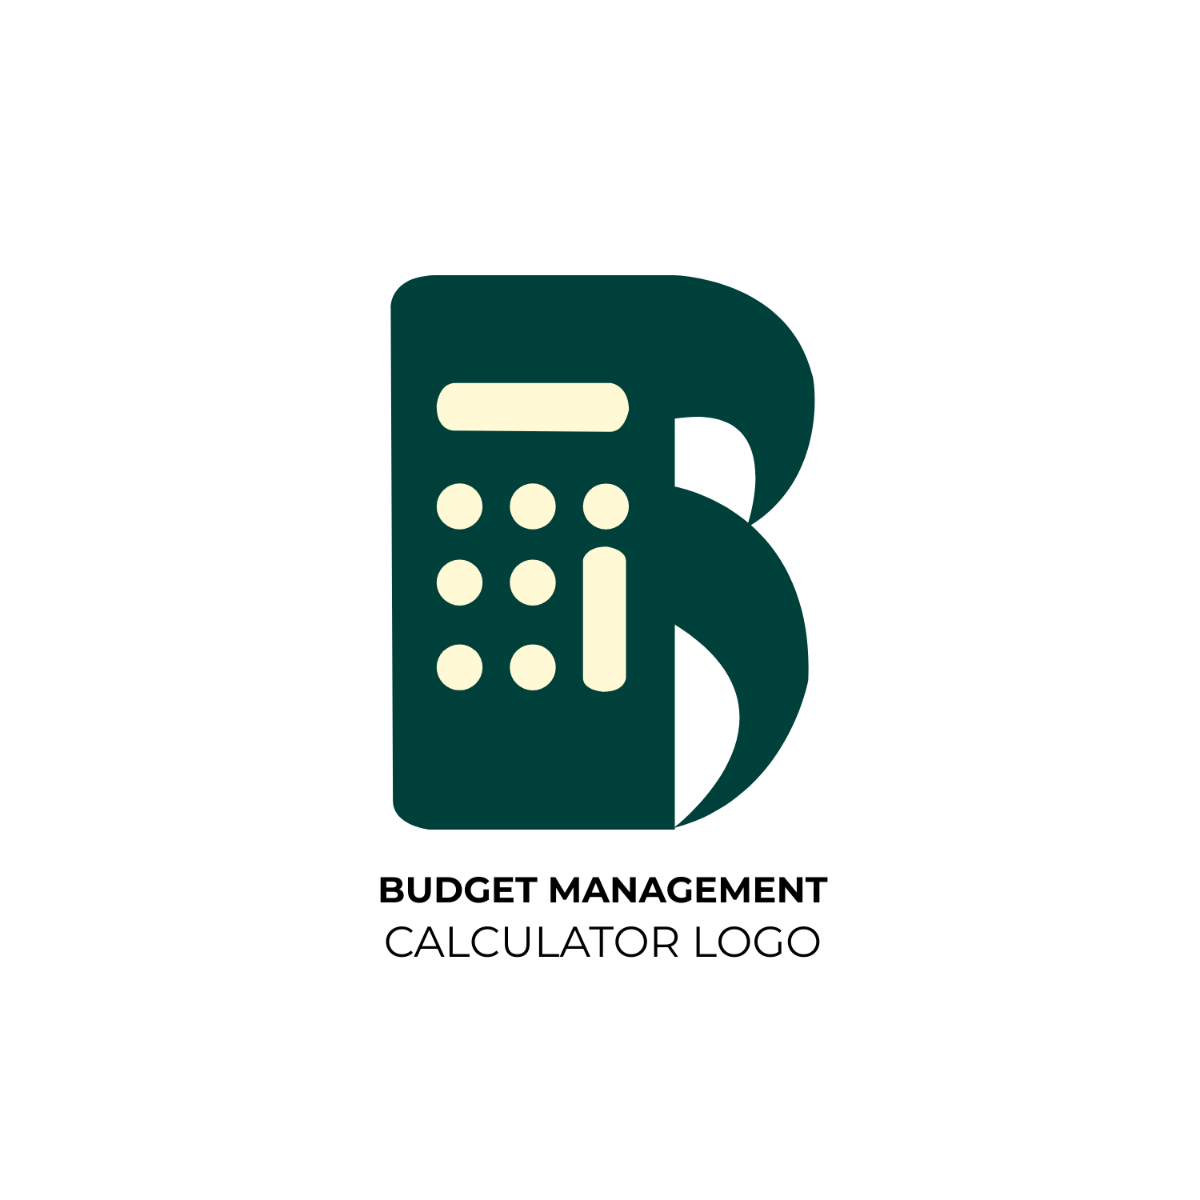 Budget Management Calculator Logo Template